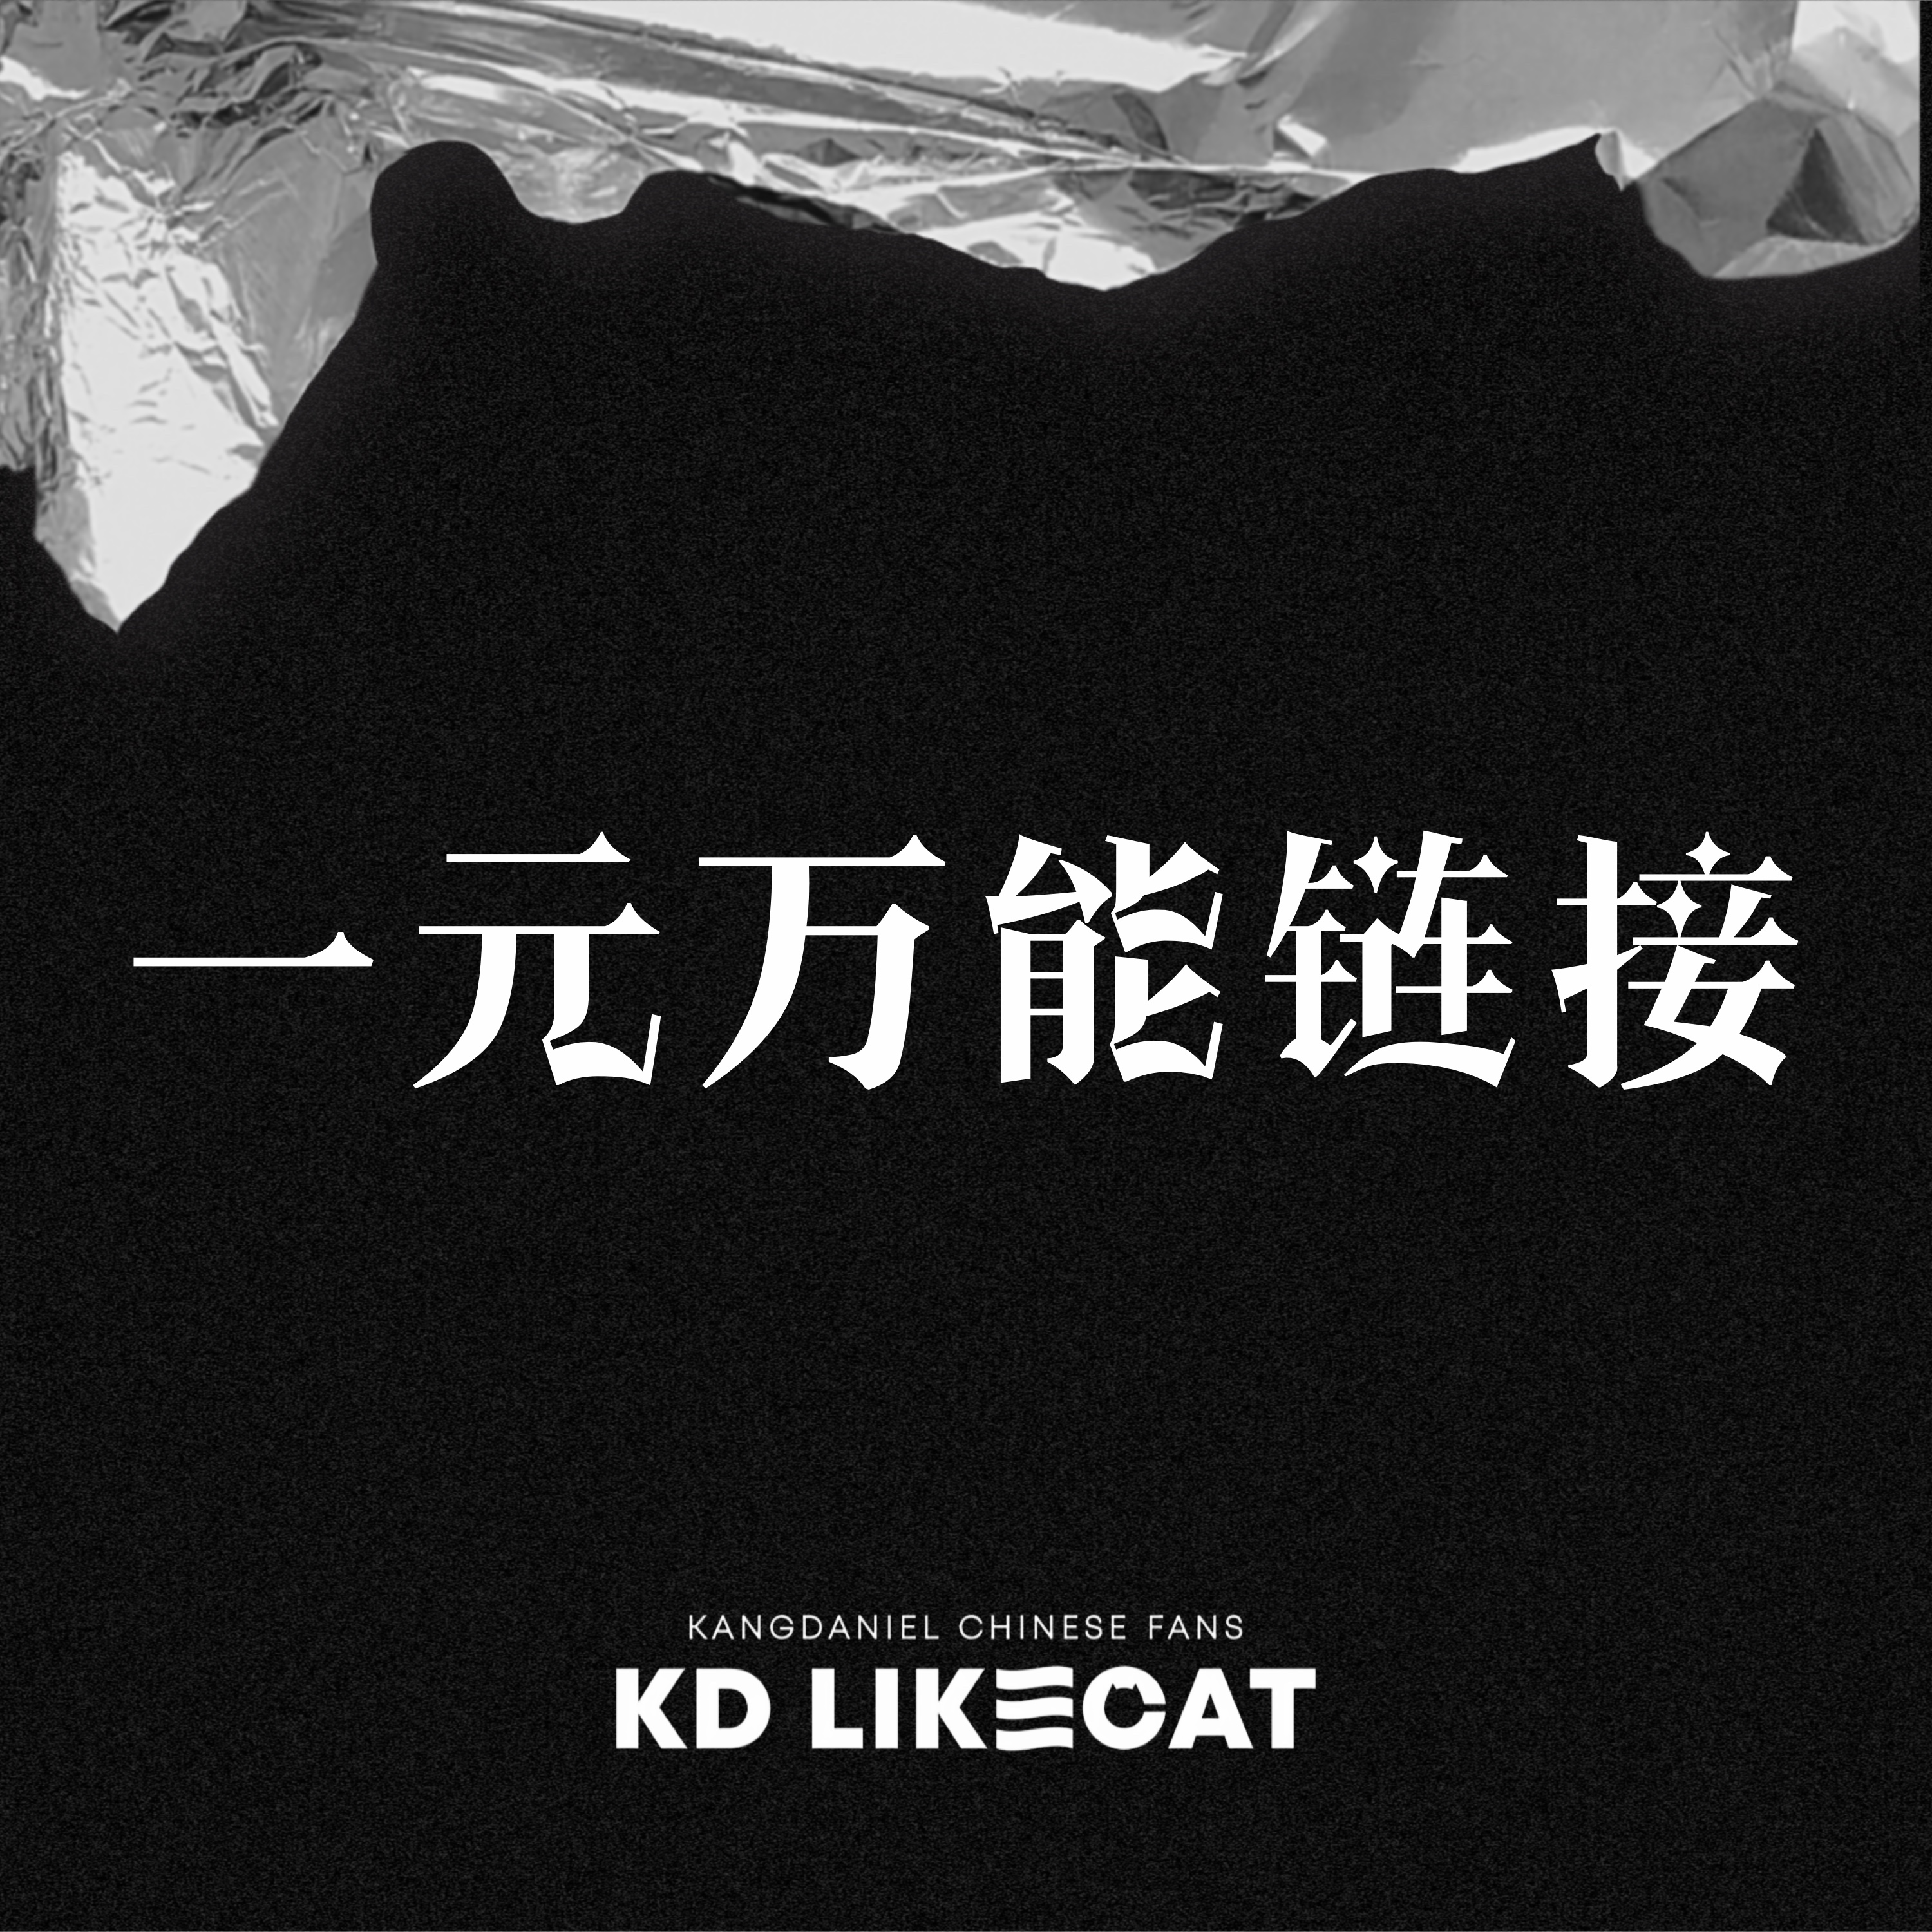 [ 一元万能链接] KANG DANIEL - 1st Full Album [The Story] _姜丹尼尔吧_likecat